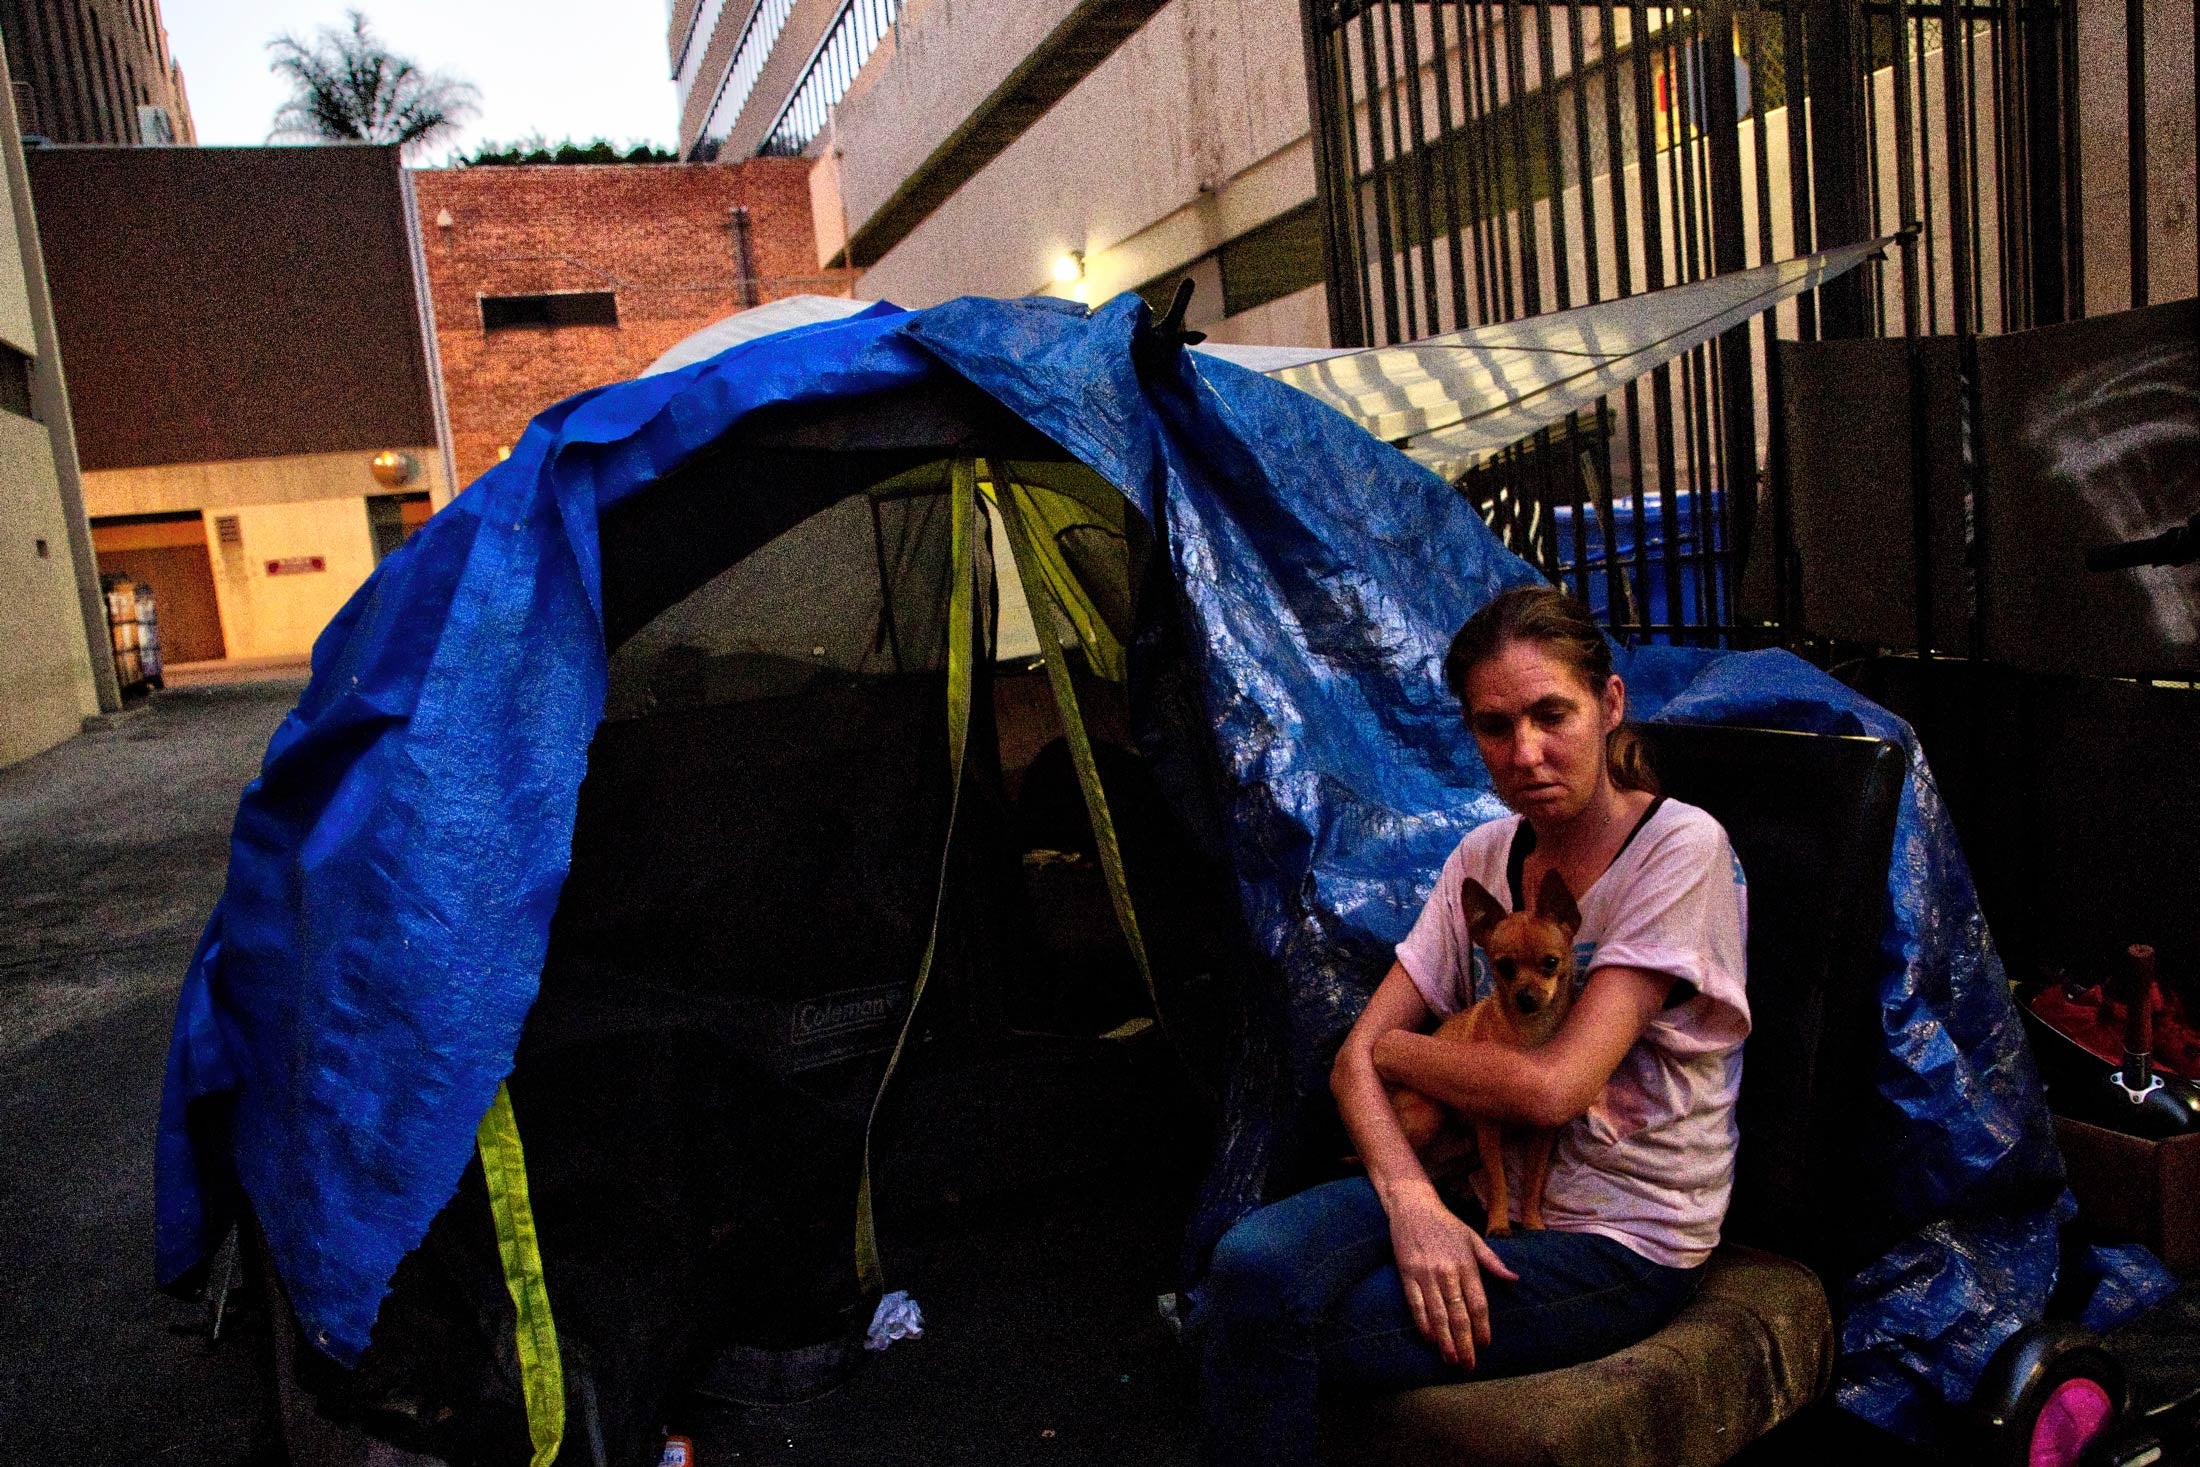 Jodan Wischmeier holds her dog outside of her home in an alley in Koreatown, Los Angeles.